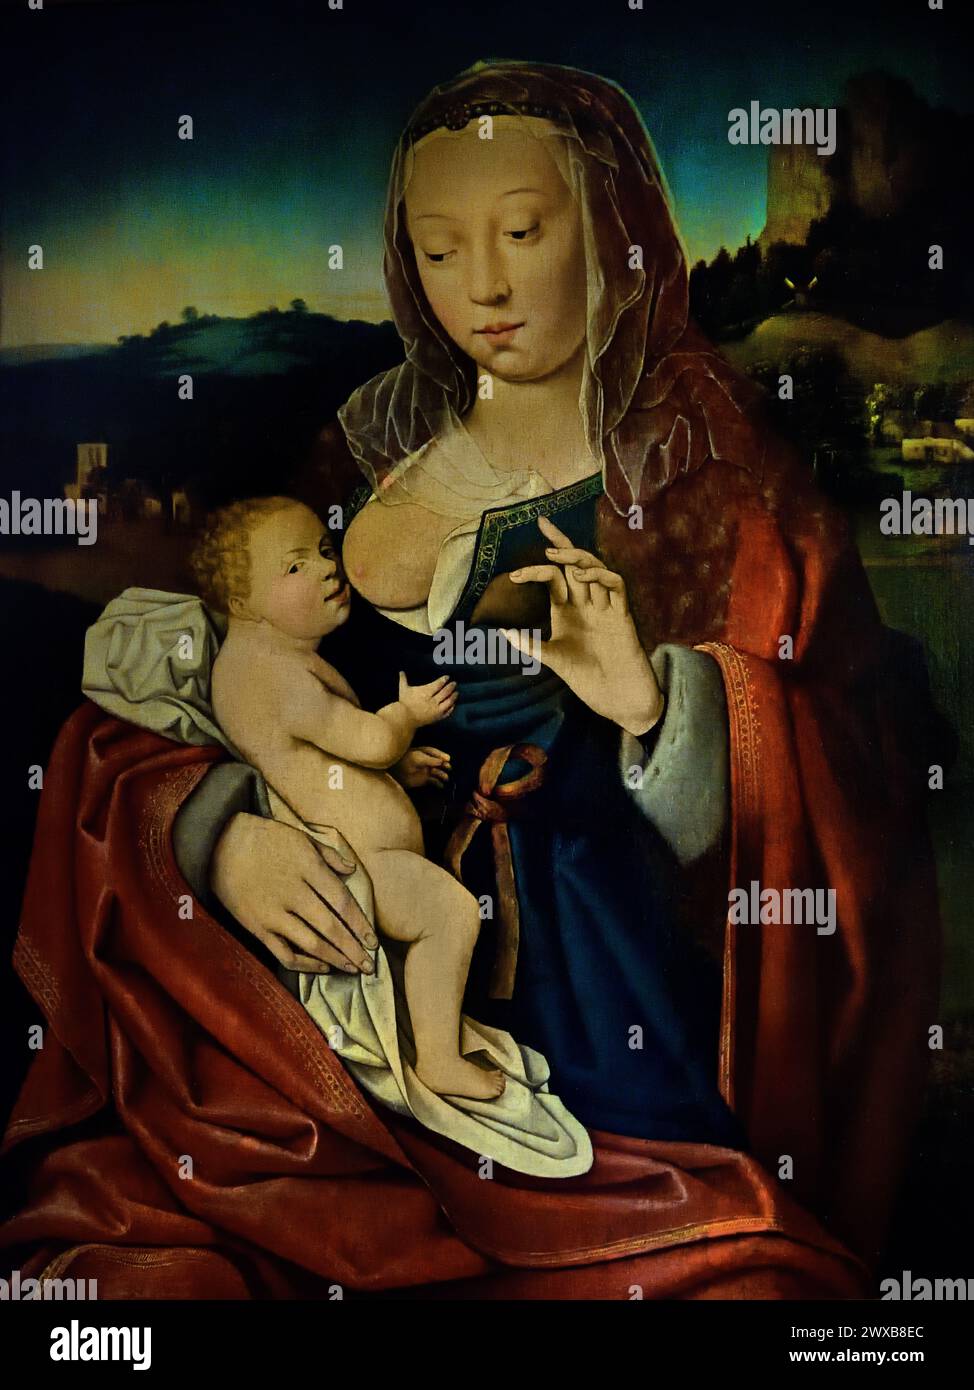 Maria Lactans mit Birne von Meister von Frankfurt 1500 - 1524 Museum Mayer van den Bergh, Antwerpen, Belgien, Belgien. Stockfoto